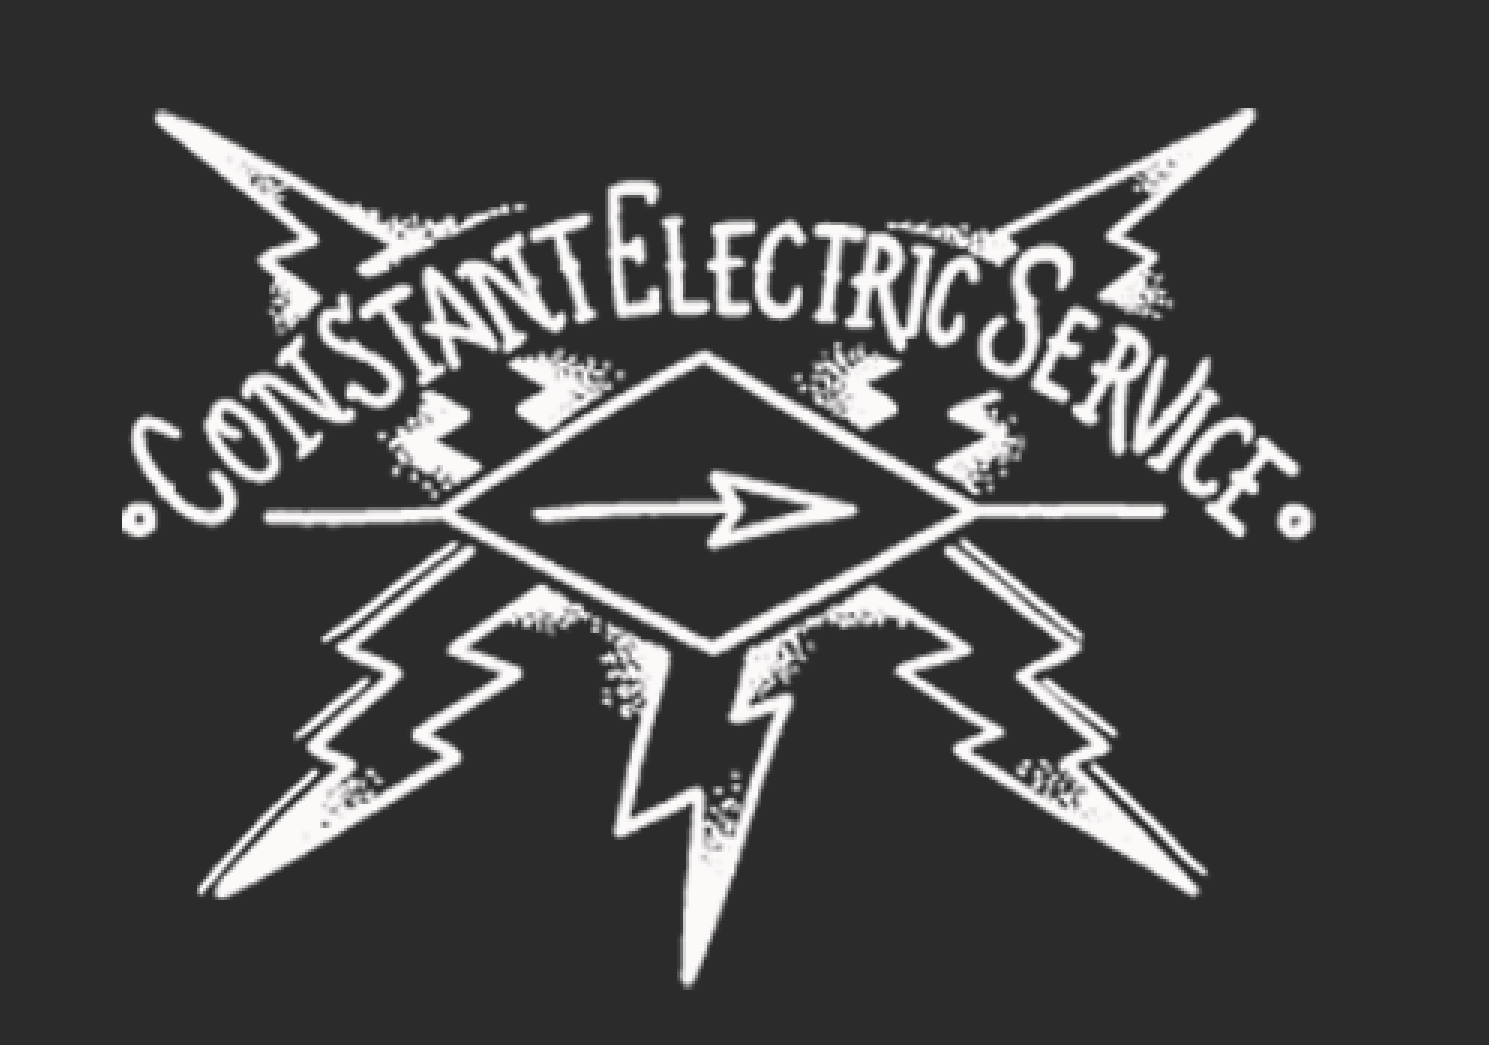 Constant Electric Service Logo